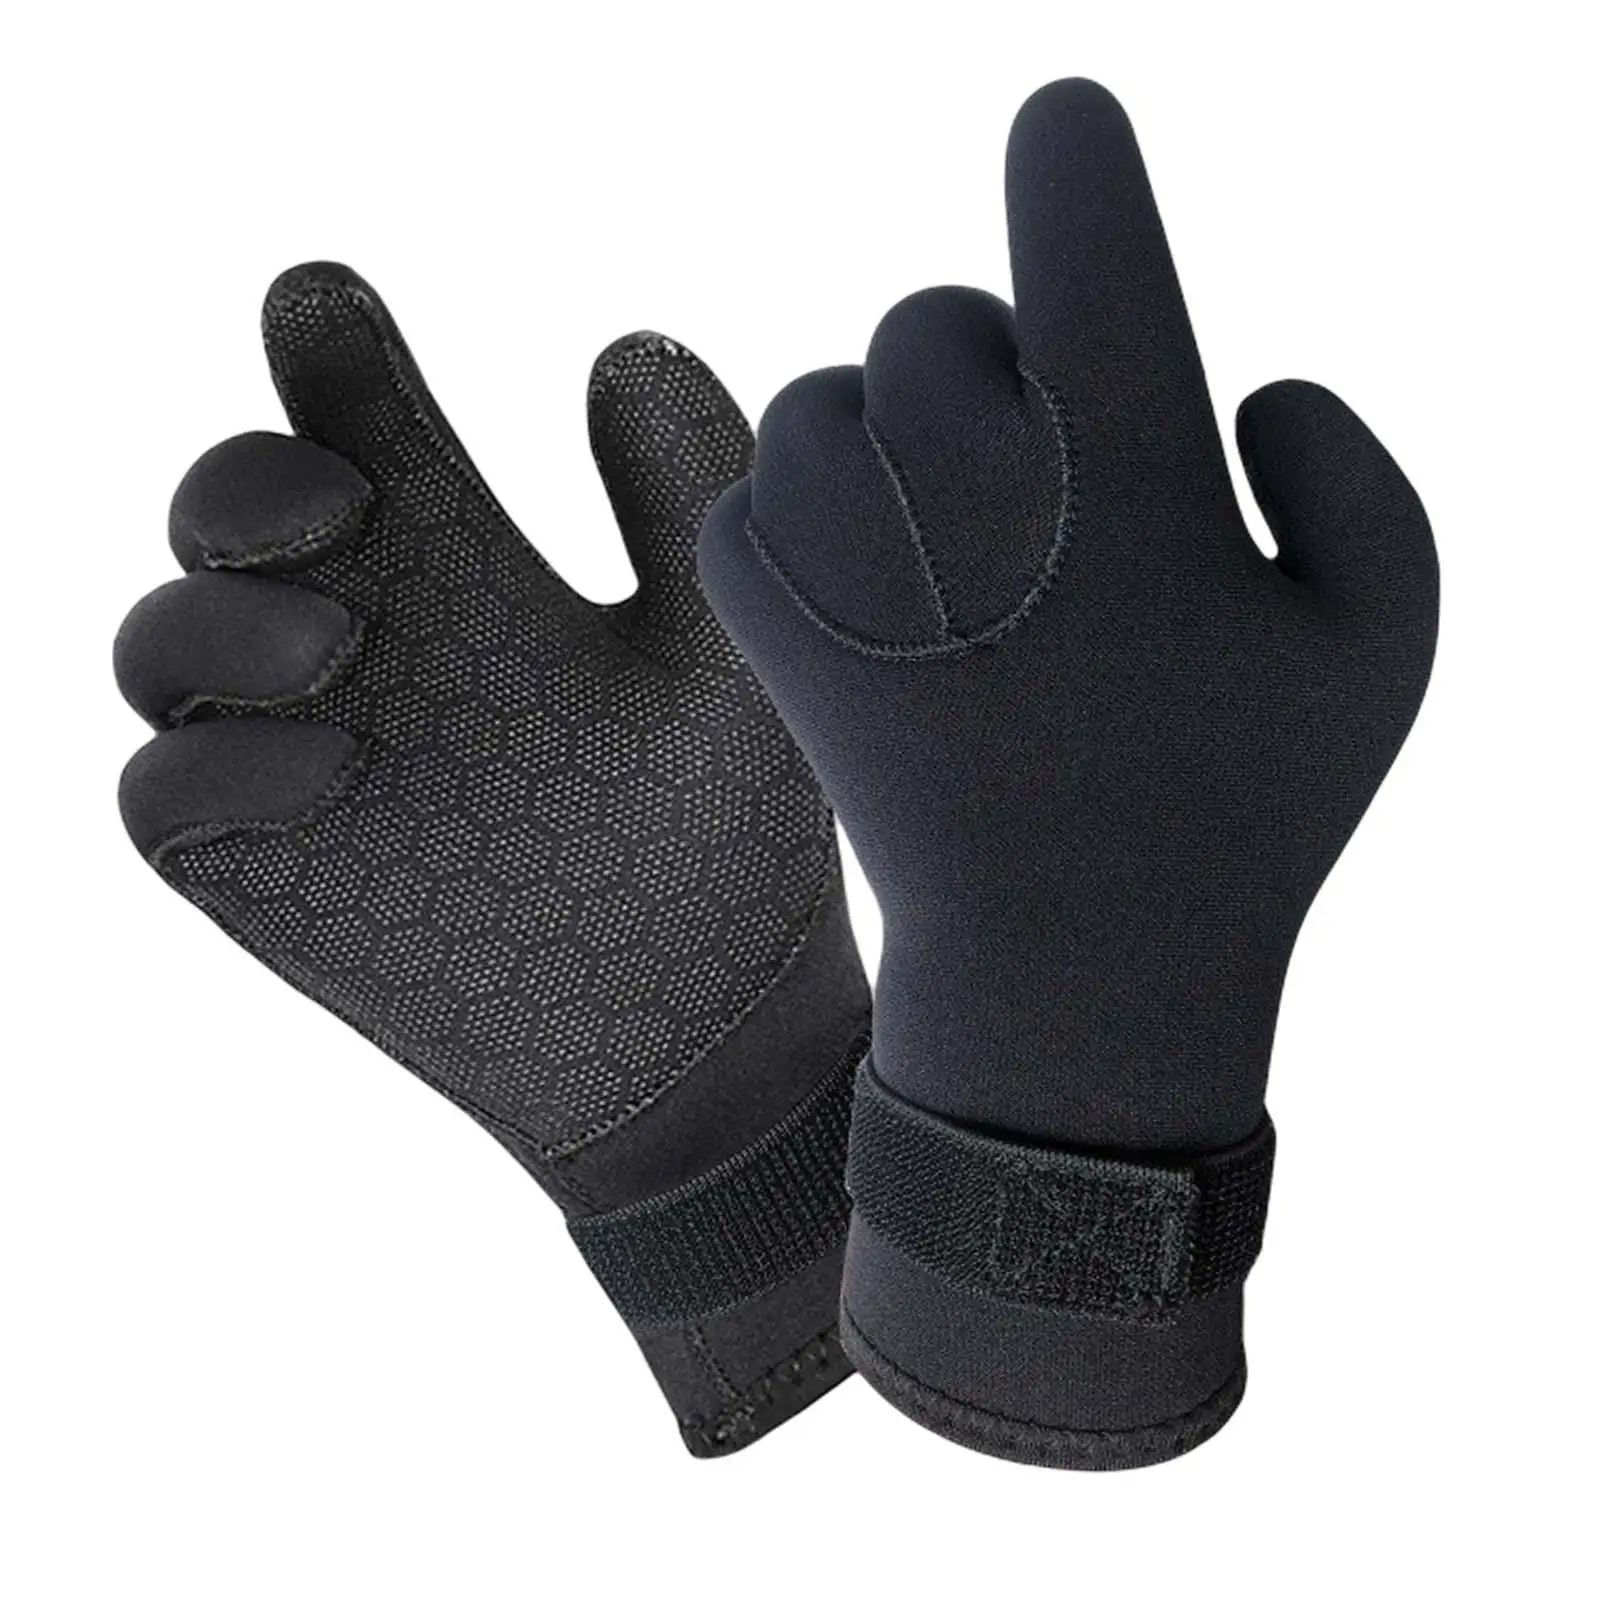 Scuba Diving Gloves Warm Wetsuit Winter Gloves Warm Dive Gloves Five Finger Wetsuit Gloves for Snorkeling Kayaking Water Sports